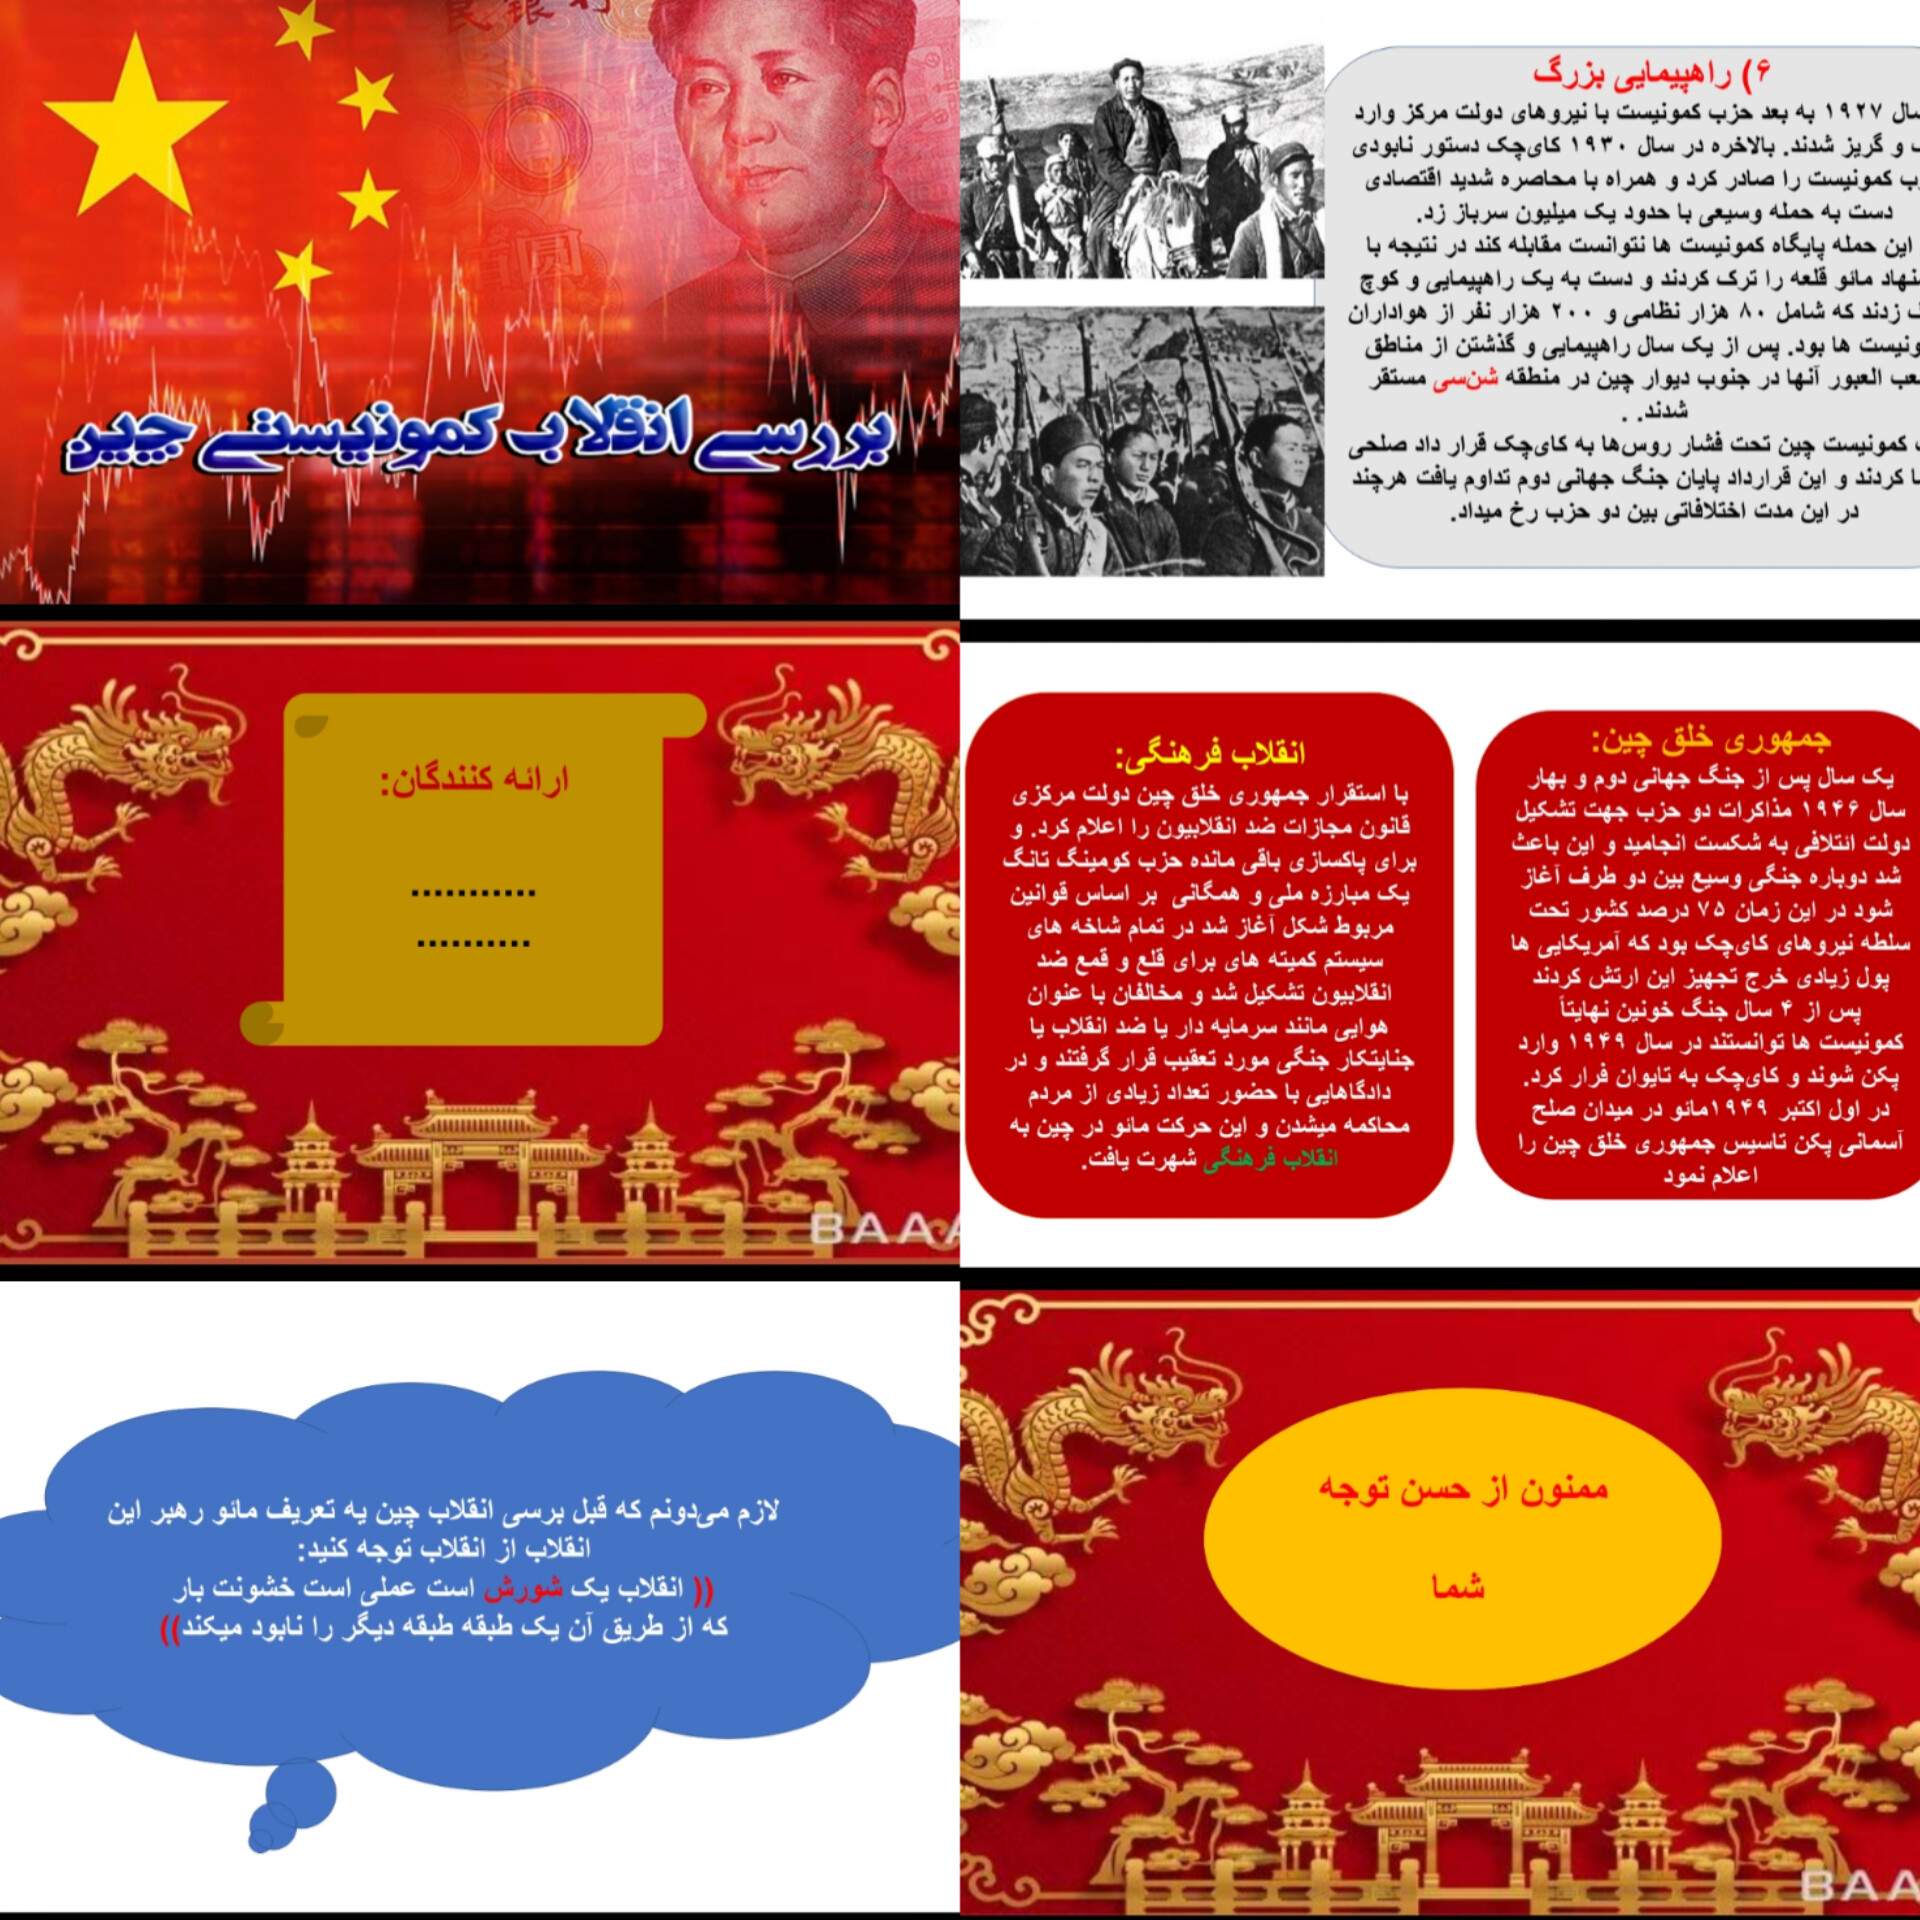 پاورپوینت با موضوع بررسی انقلاب کمونیستی چین